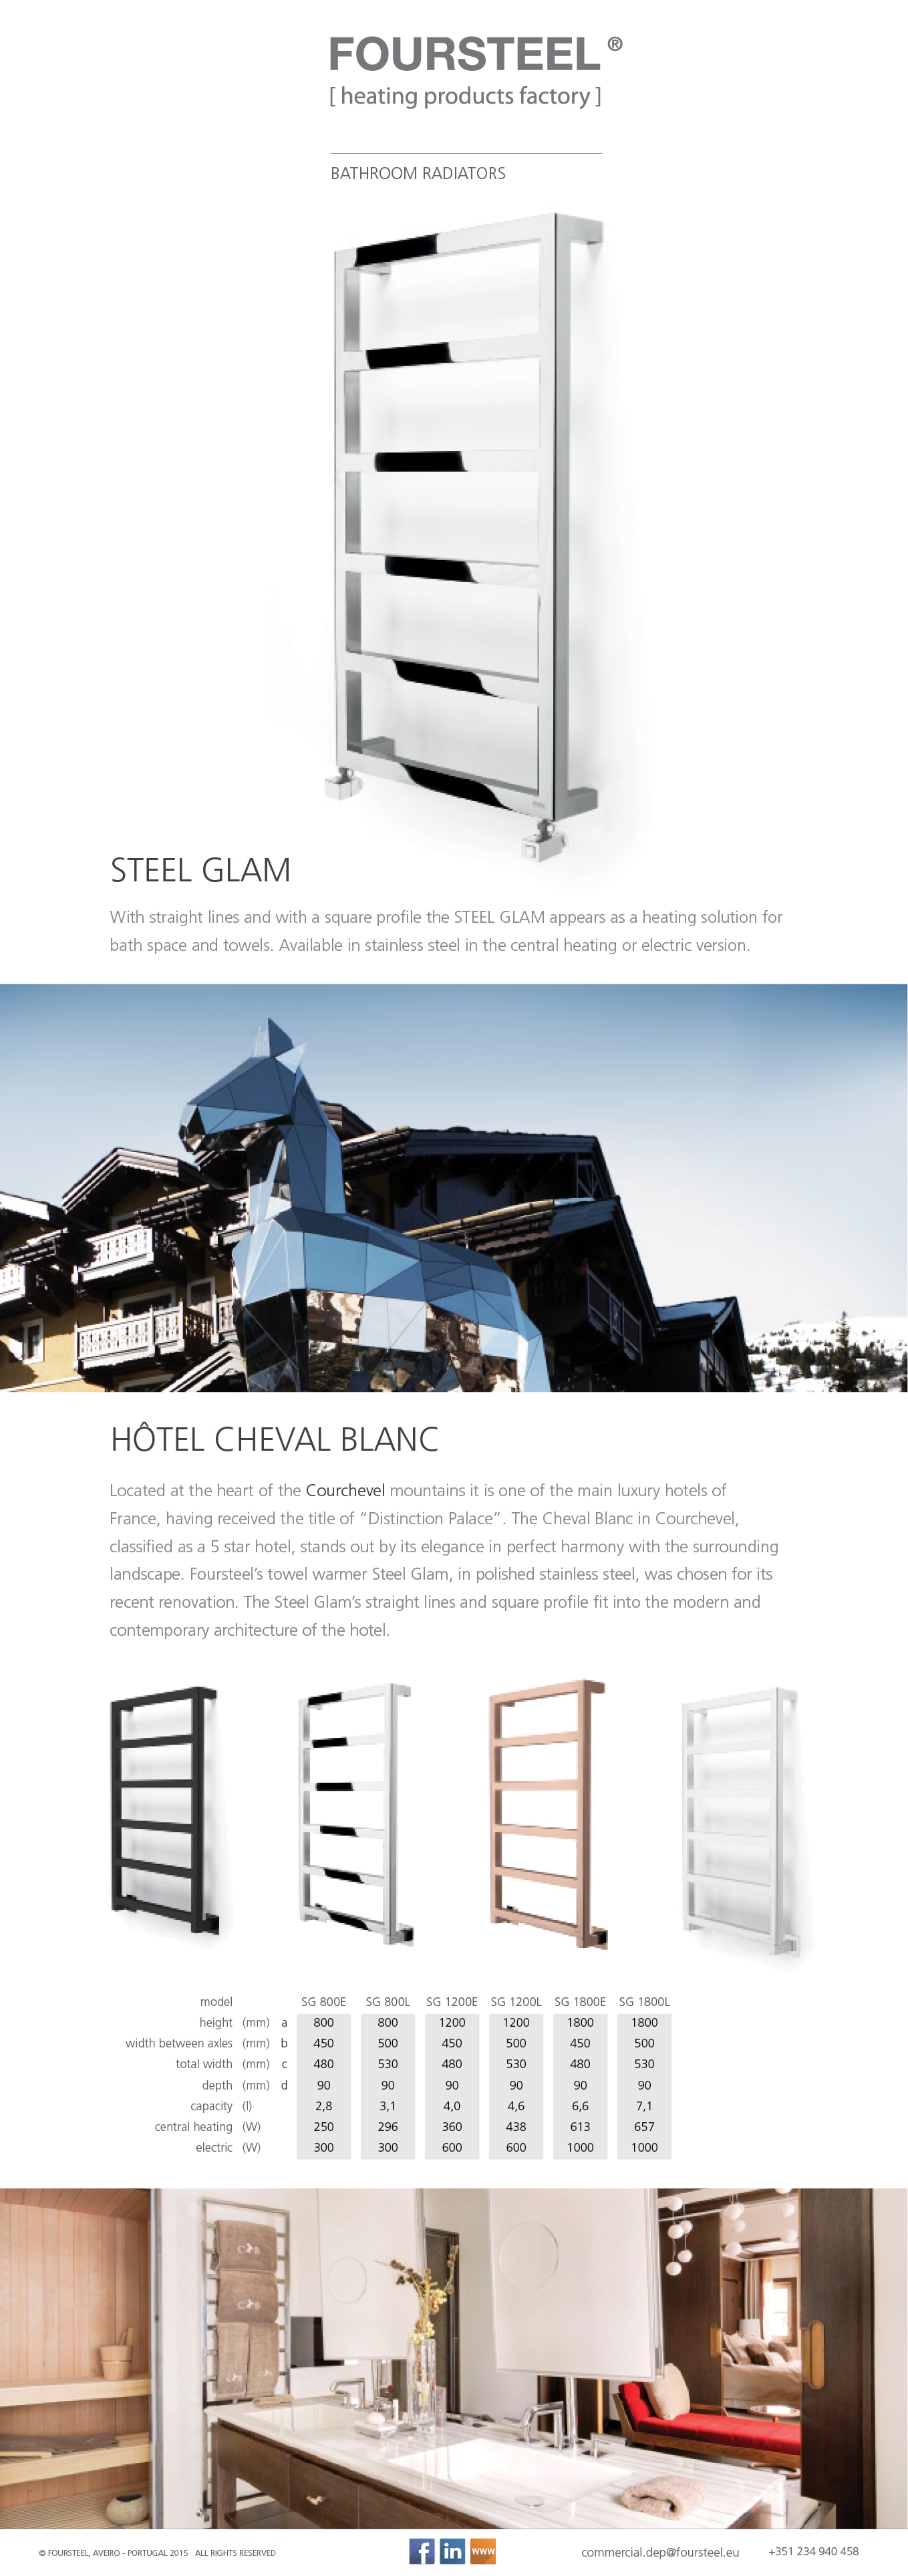 steel glam - nov 2015